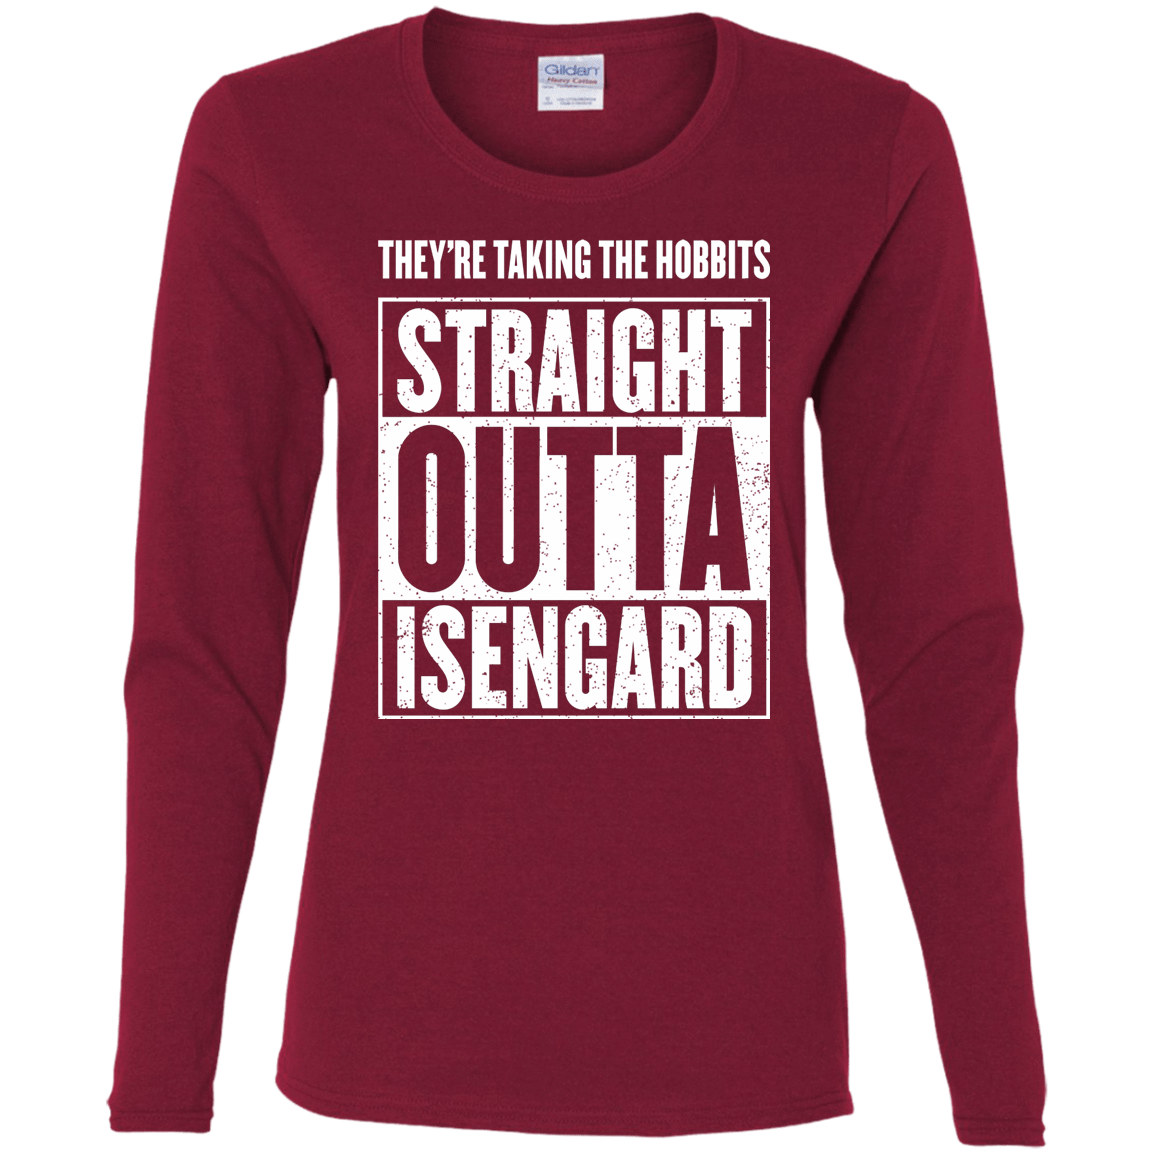 T-Shirts Cardinal / S Straight Outta Isengard Women's Long Sleeve T-Shirt